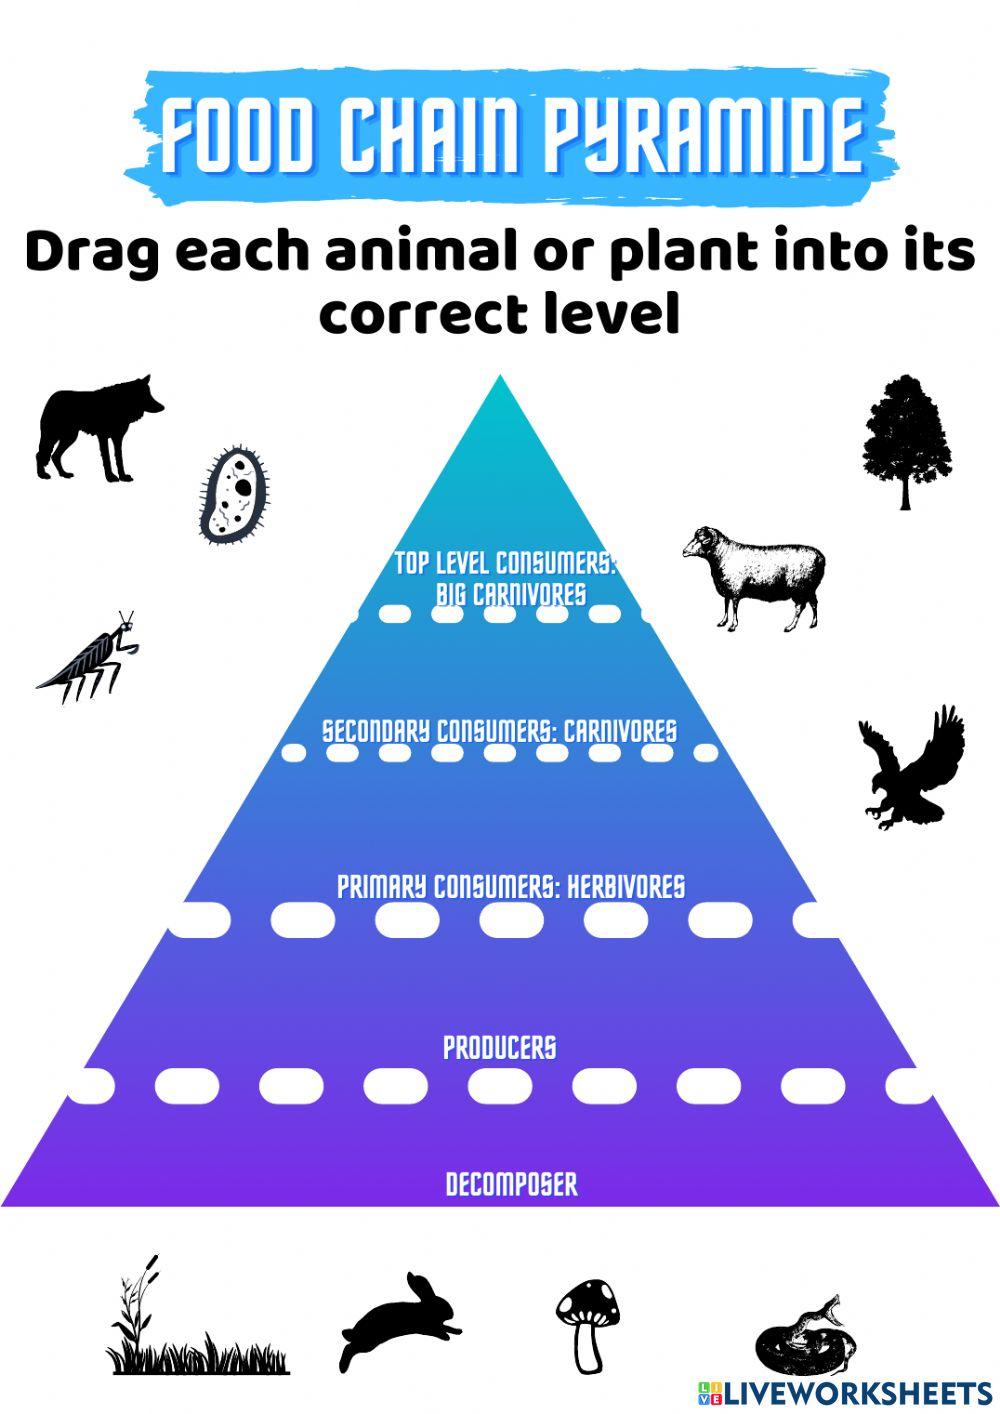 Food chain pyramide